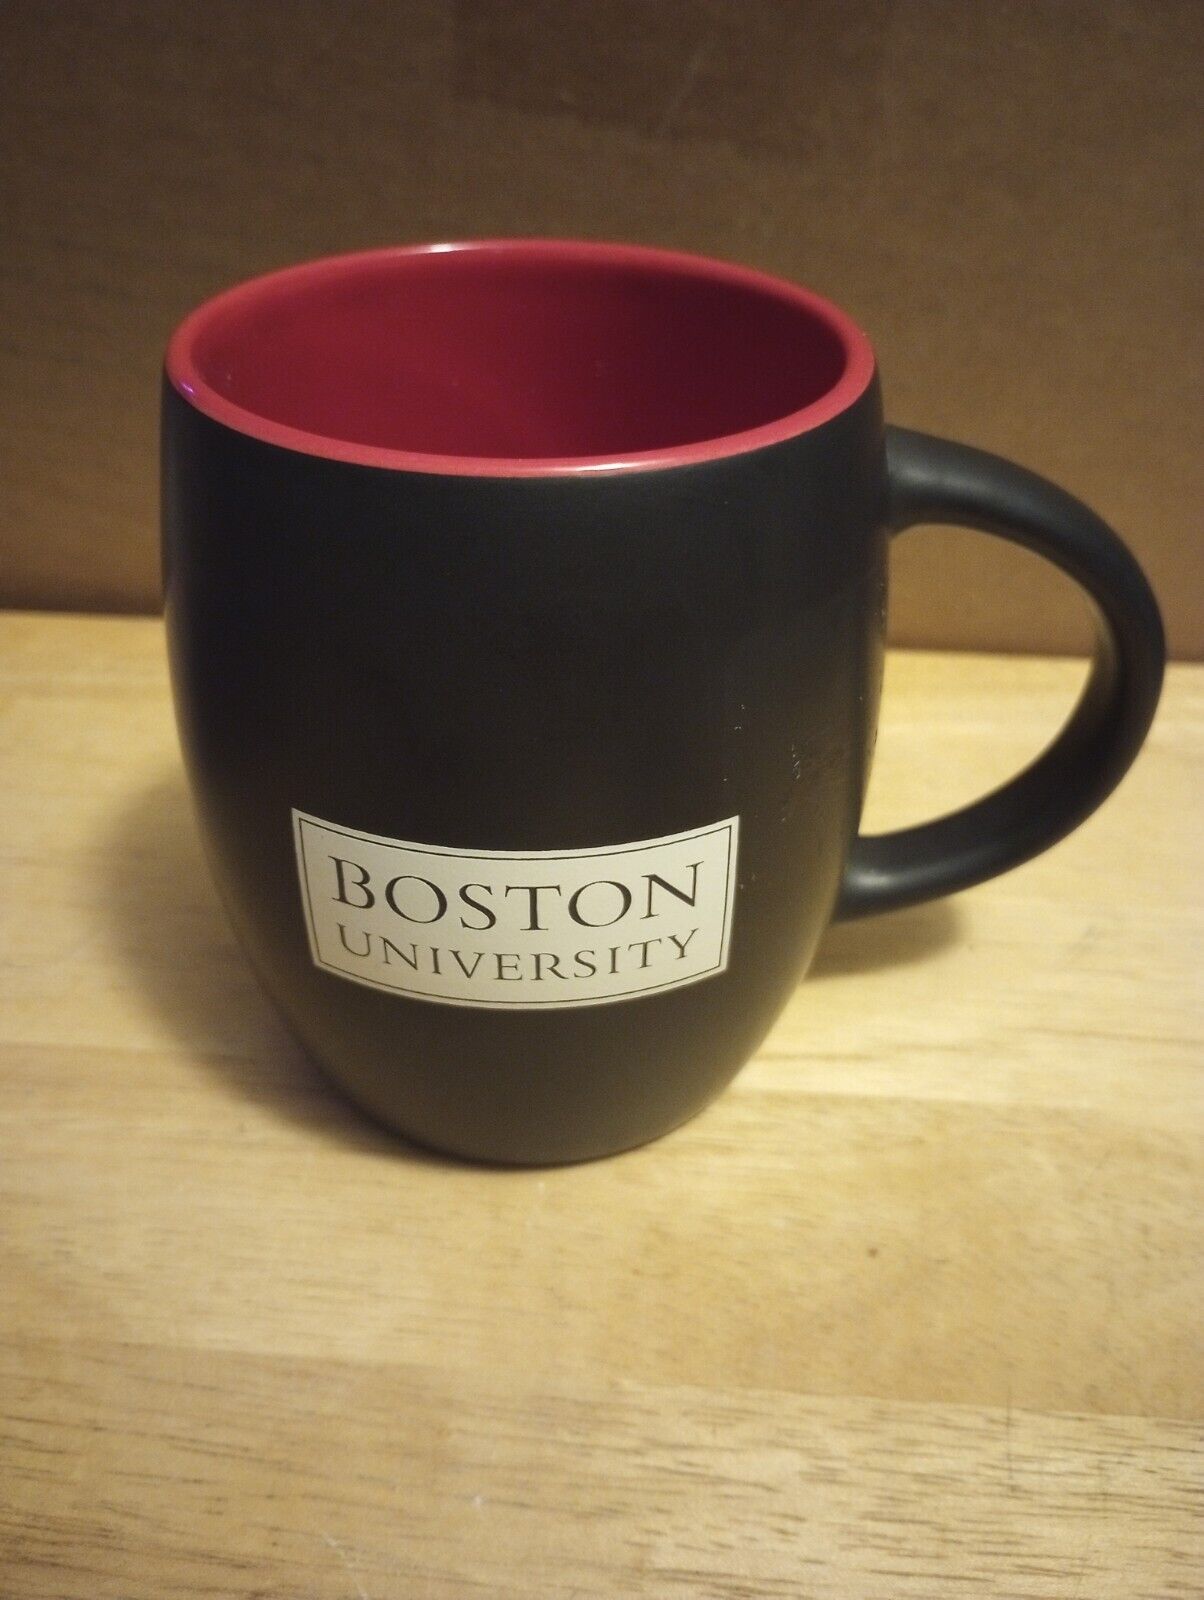 Boston University Coffee Tea Mug Cup No Chips Red Inside Black Outside Nice Mug